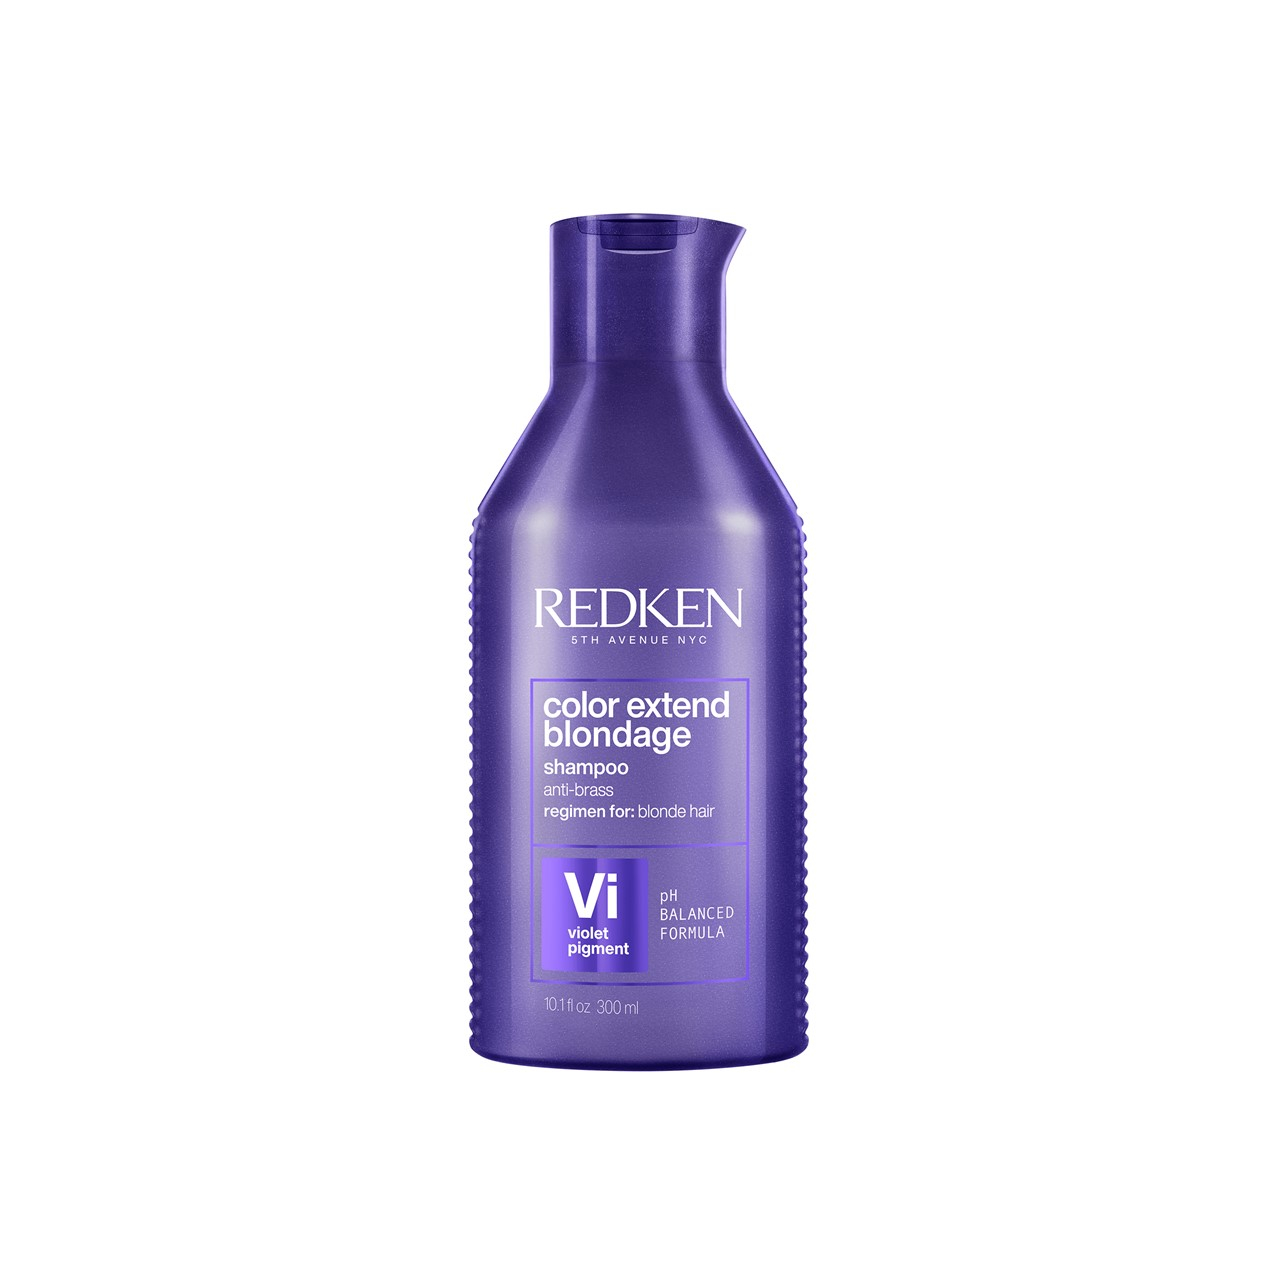 Redken Color Extend Blondage Shampoo 300ml (10.14fl oz)